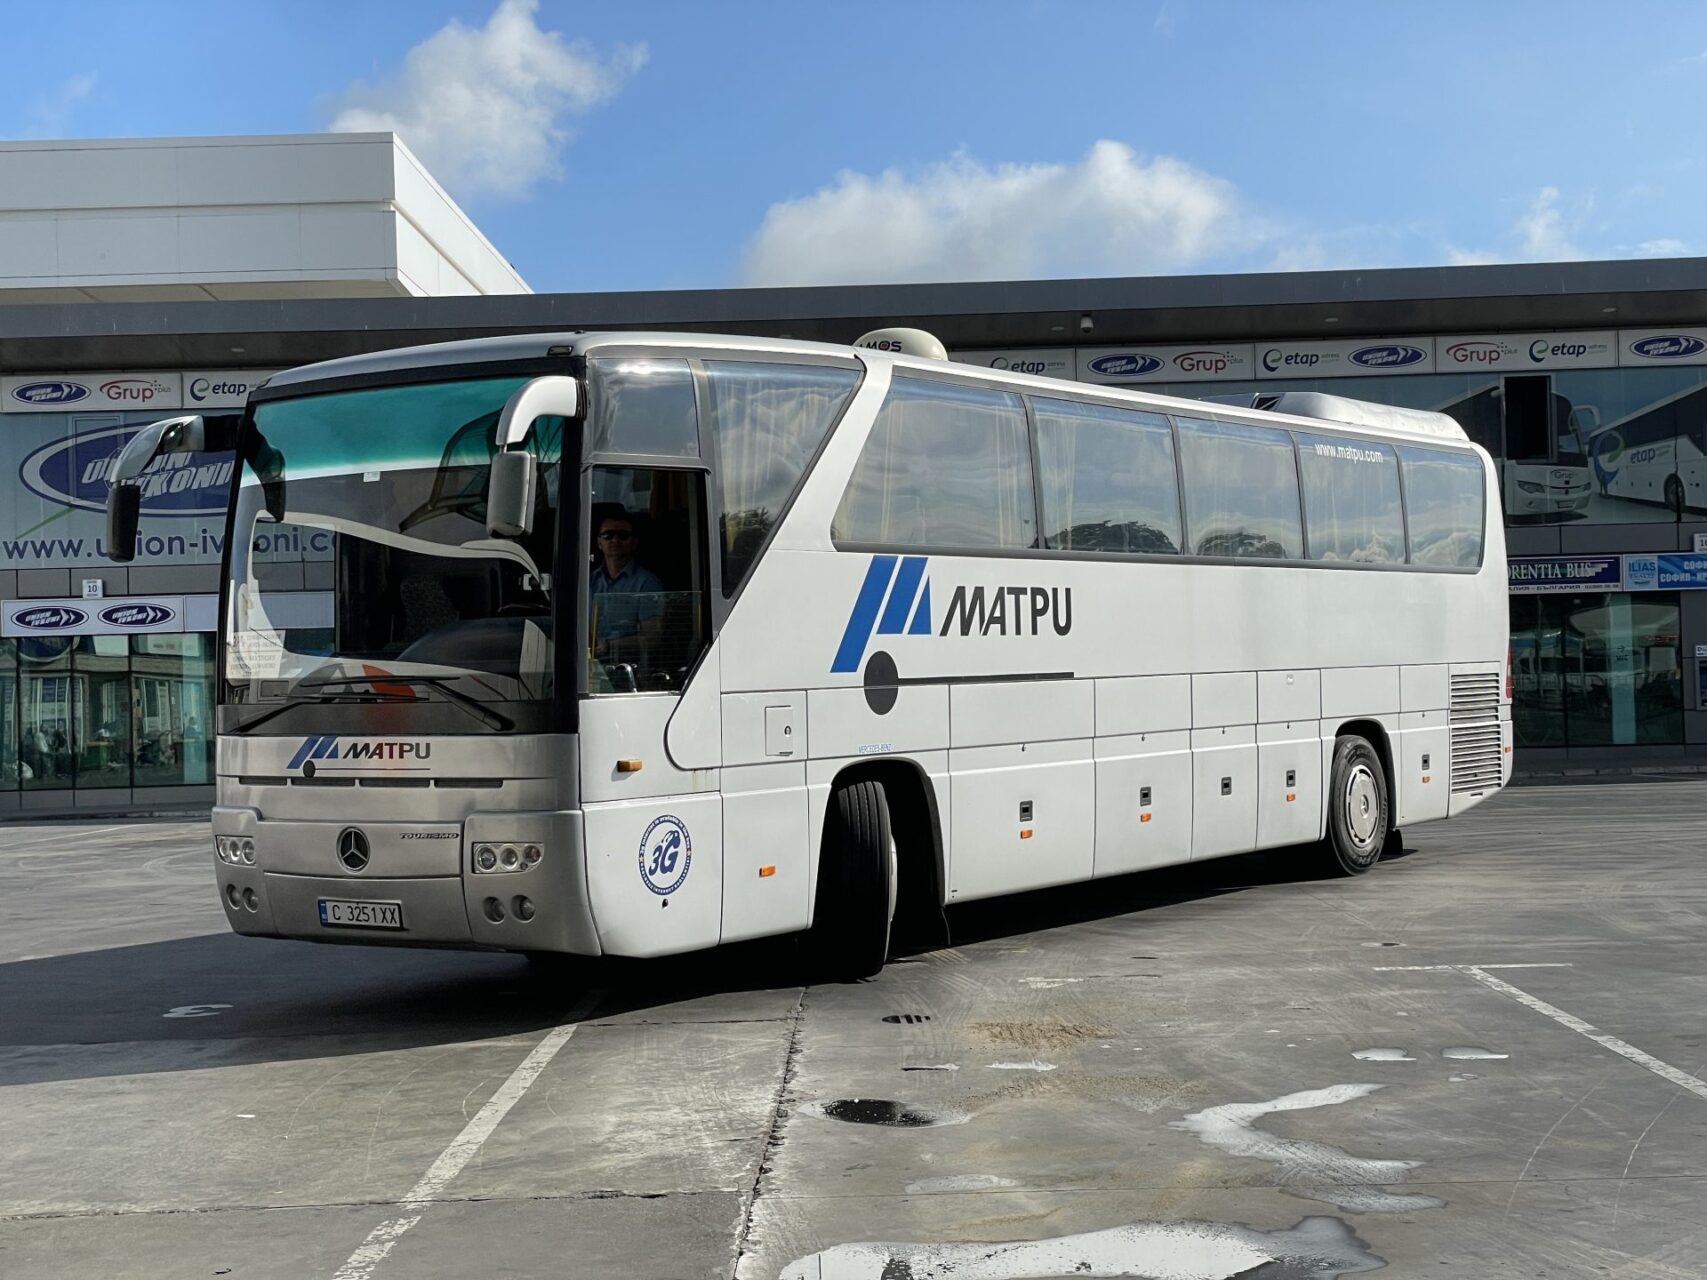 Matpu bus lines in Skopje